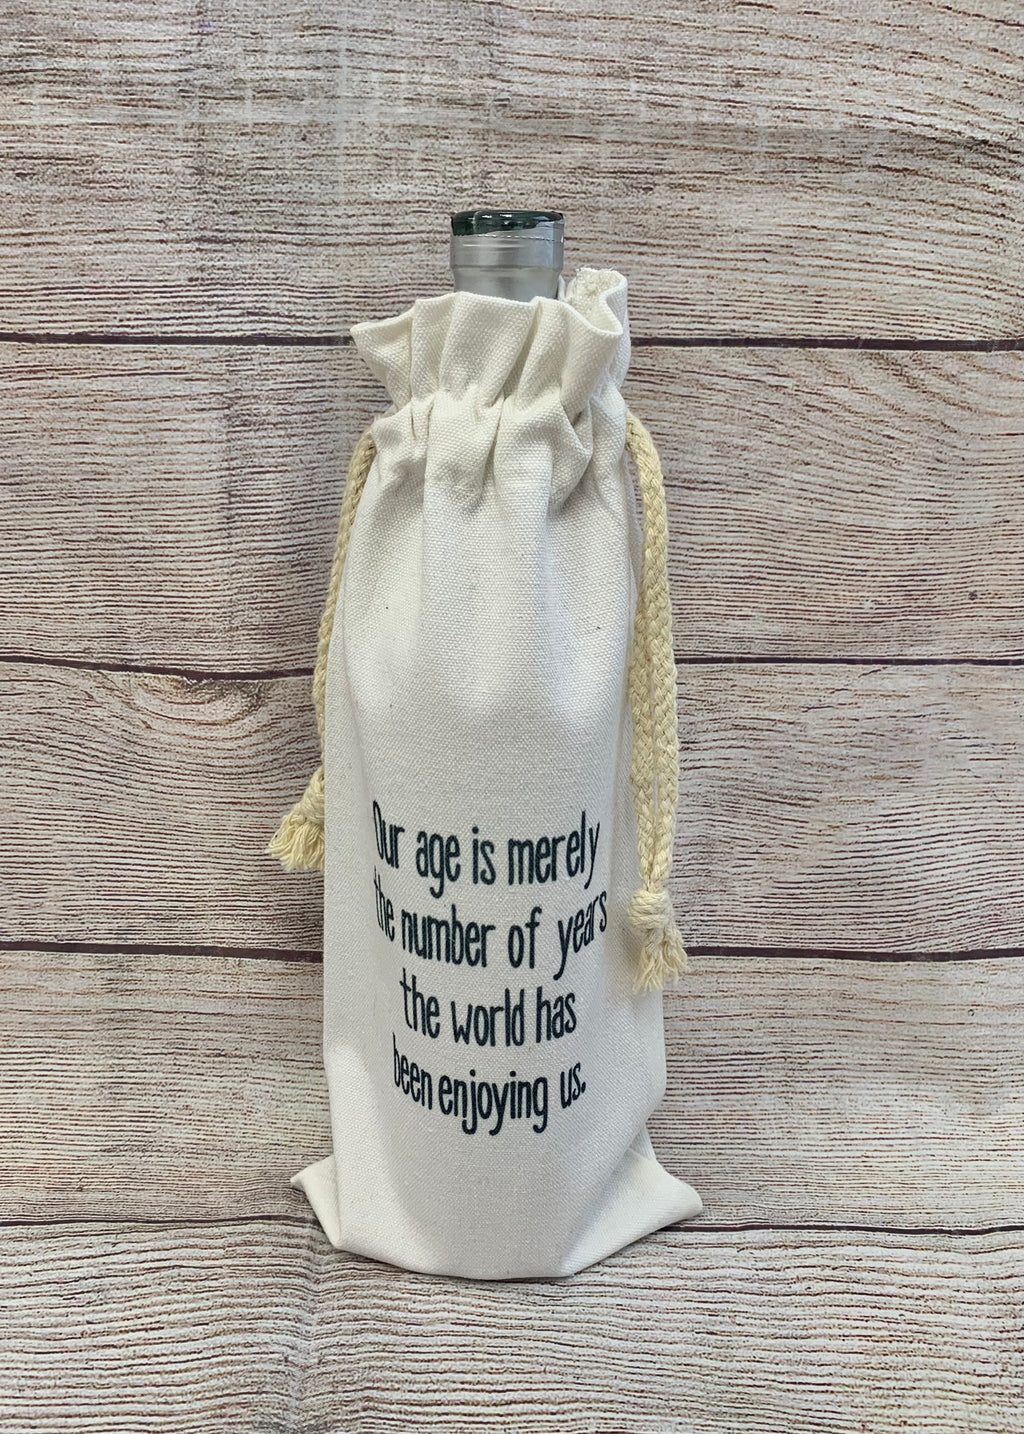 "World has been enjoying us" Wine Bag